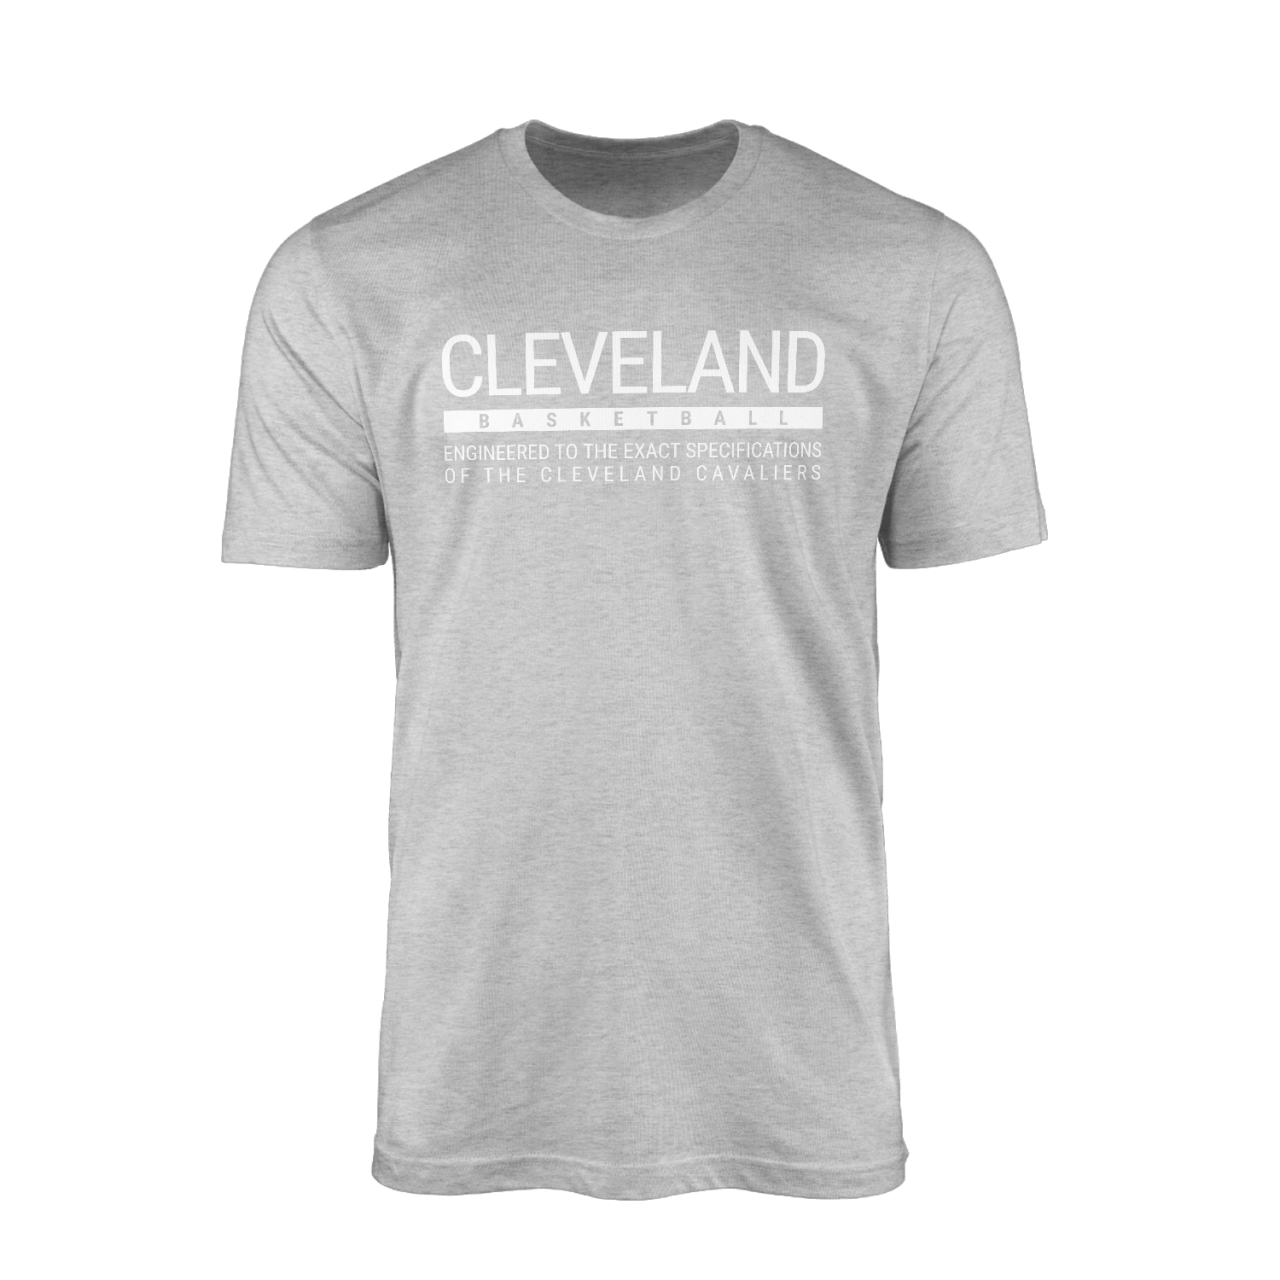 Cleveland Basketball Gri Tshirt